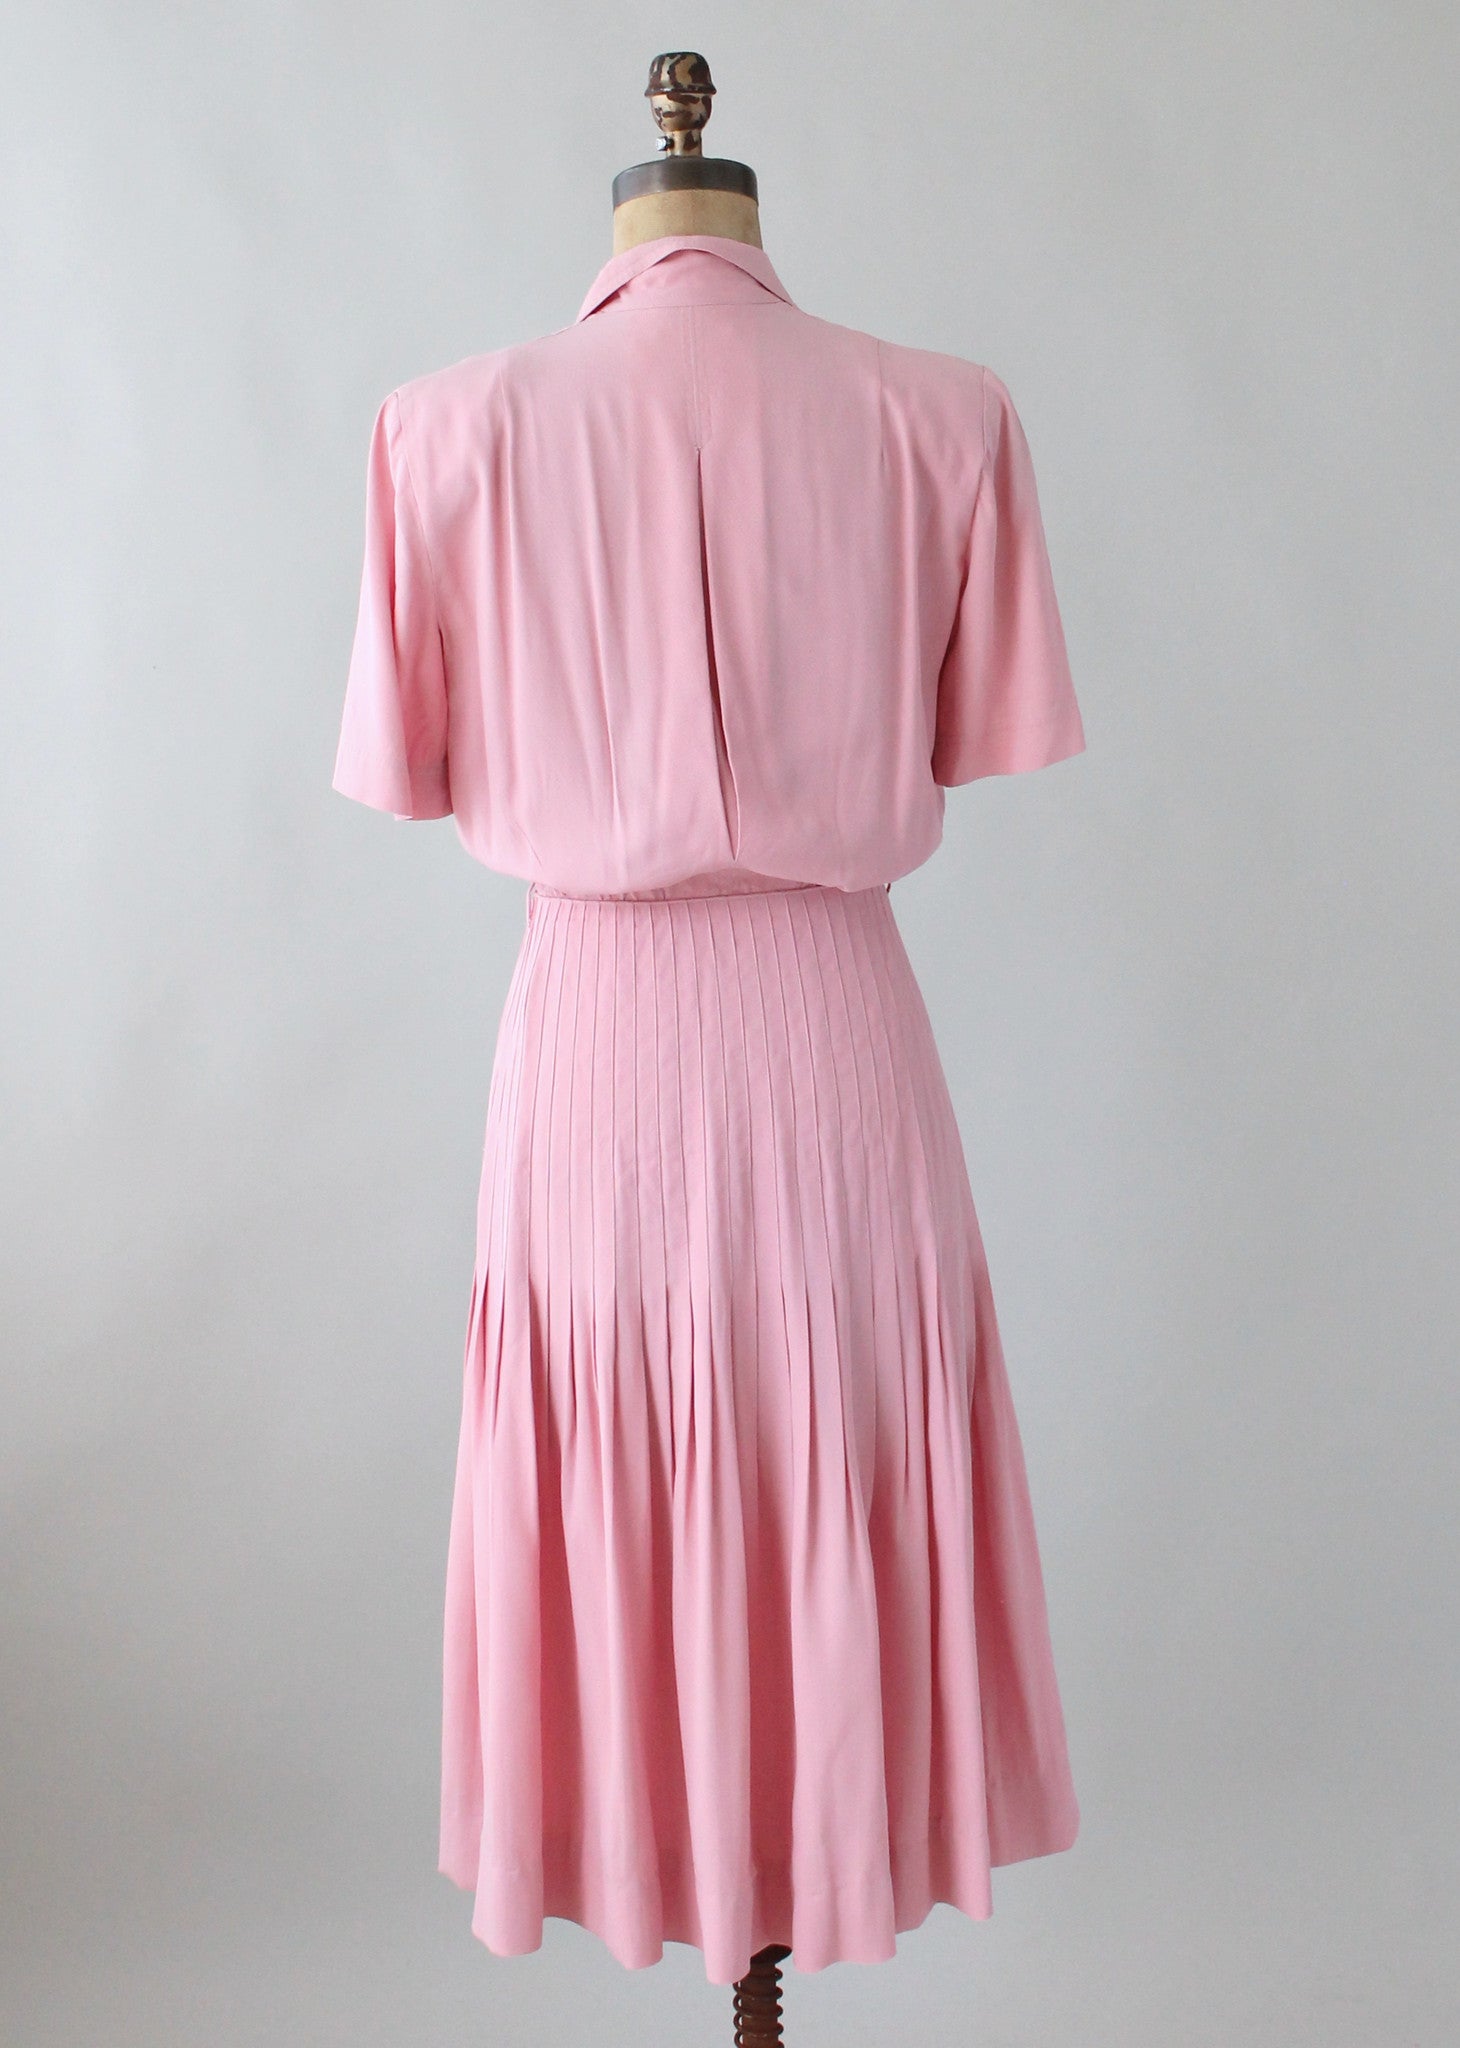 Vintage 1940s Pink Rayon Sportswear Dress - Raleigh Vintage